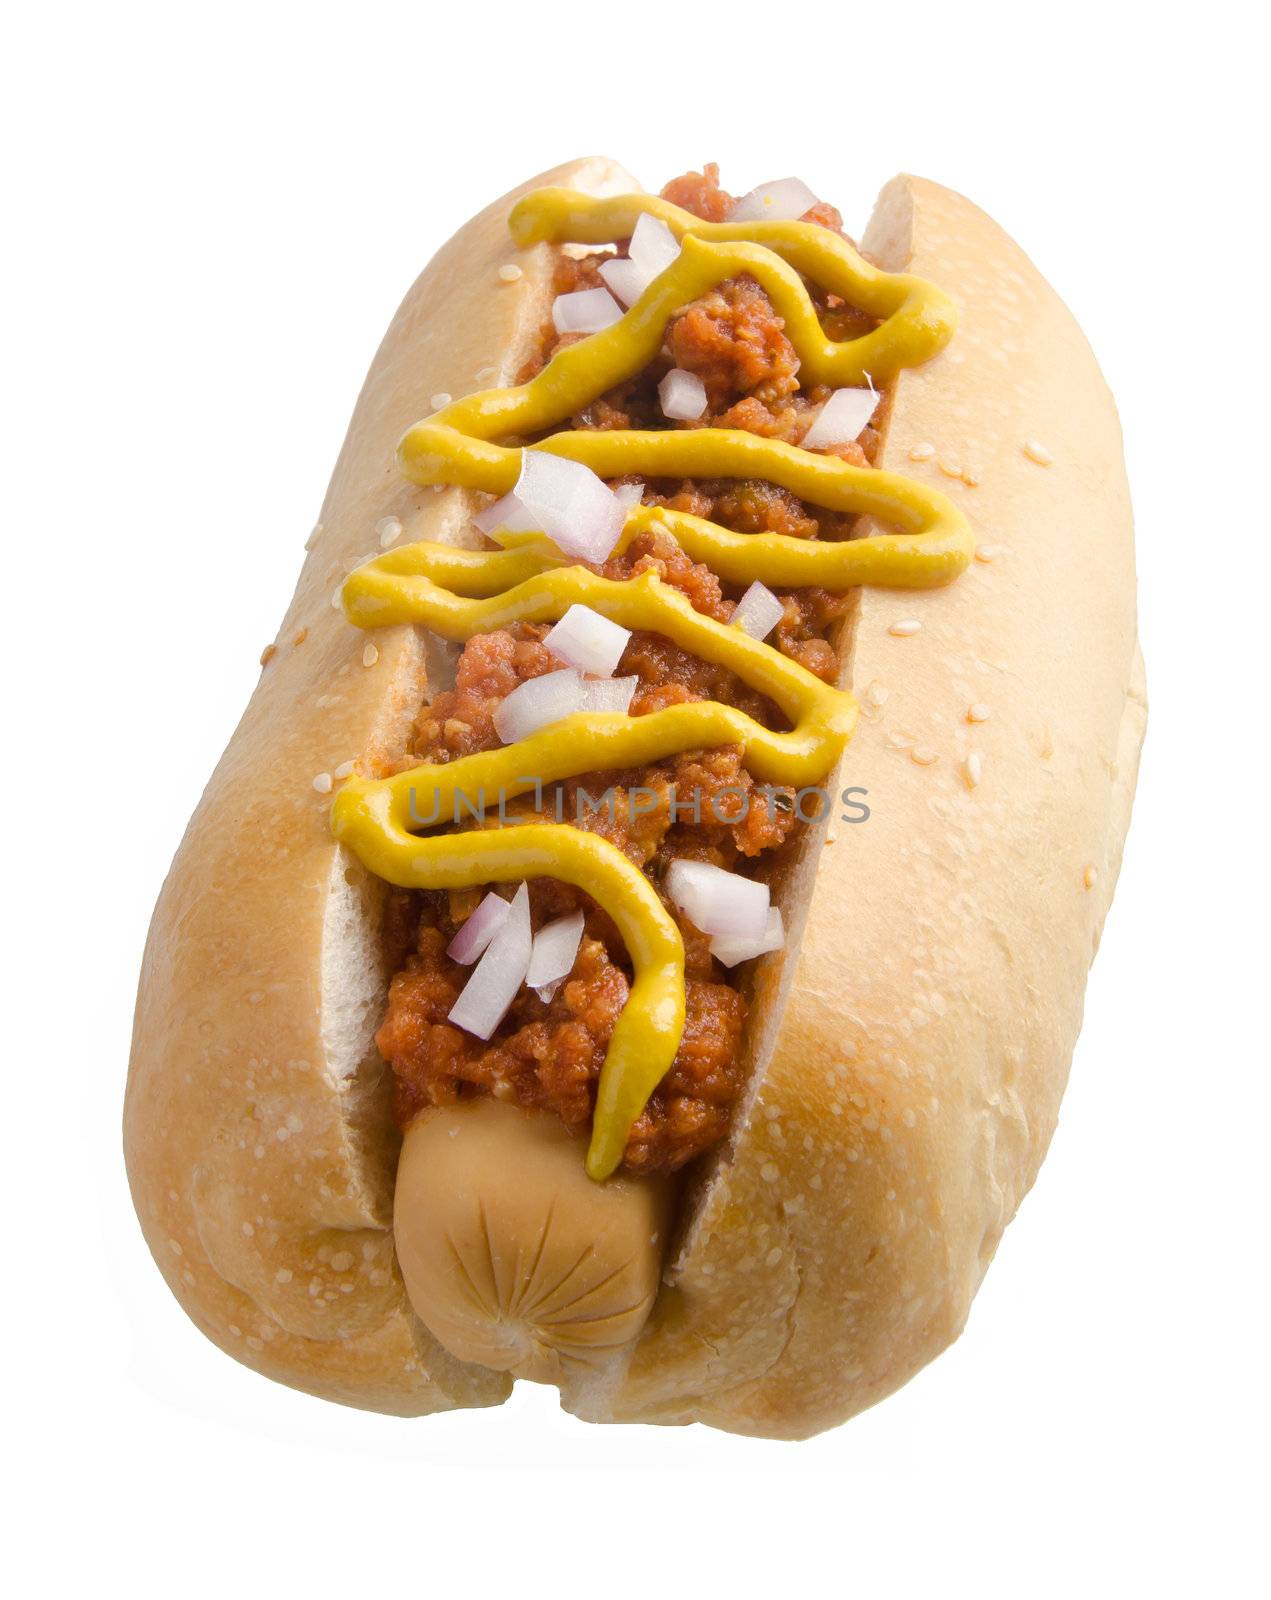 Hot dog on the white background by heinteh